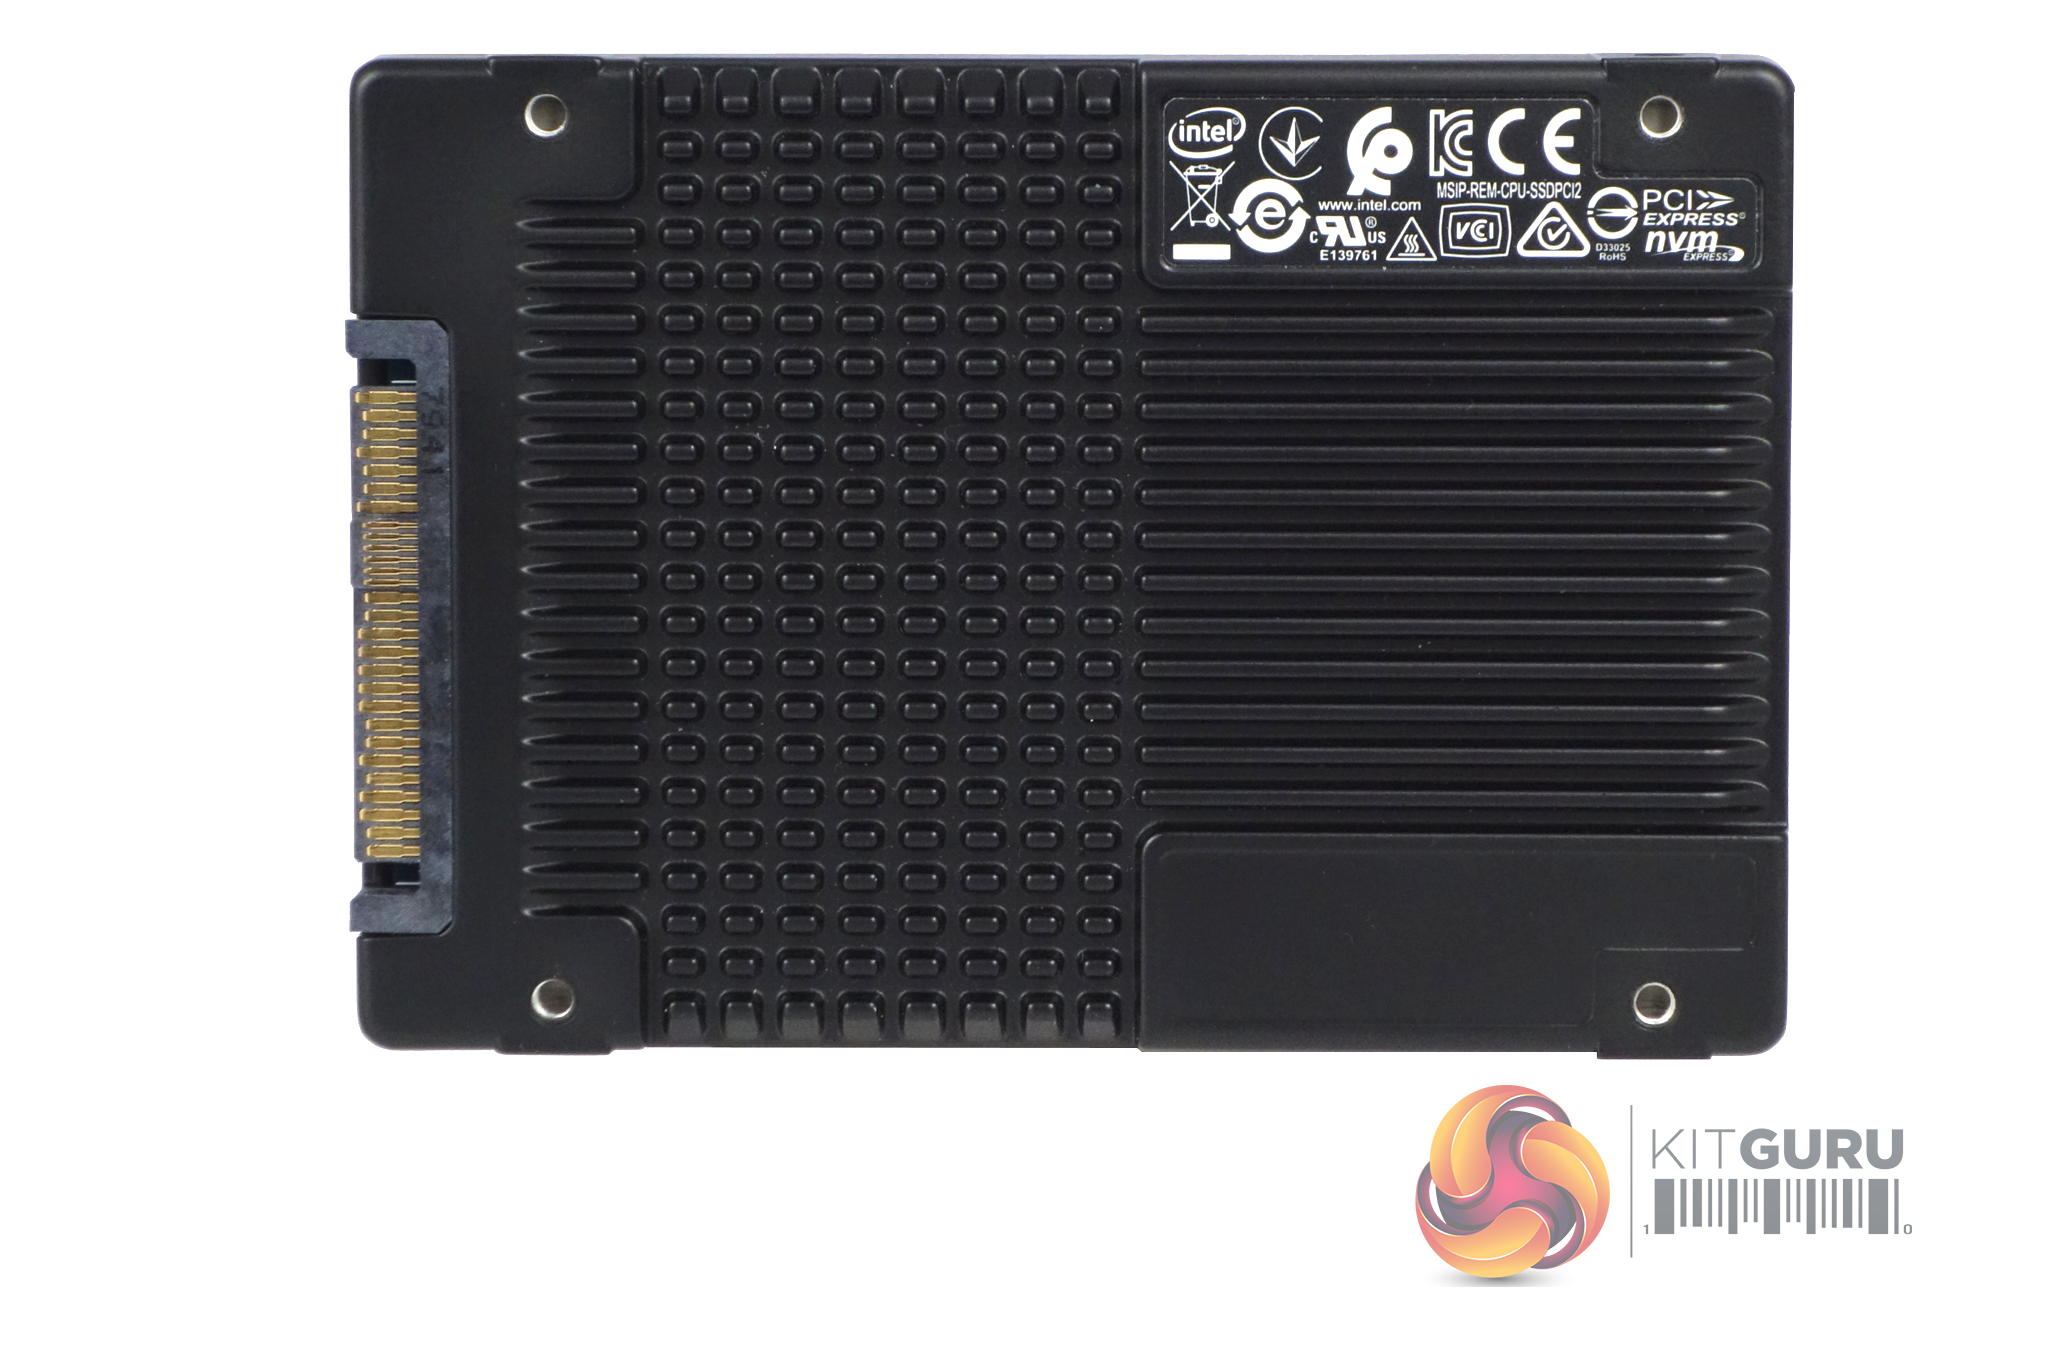 Intel Optane DC P4800X 750GB SSD Review | KitGuru